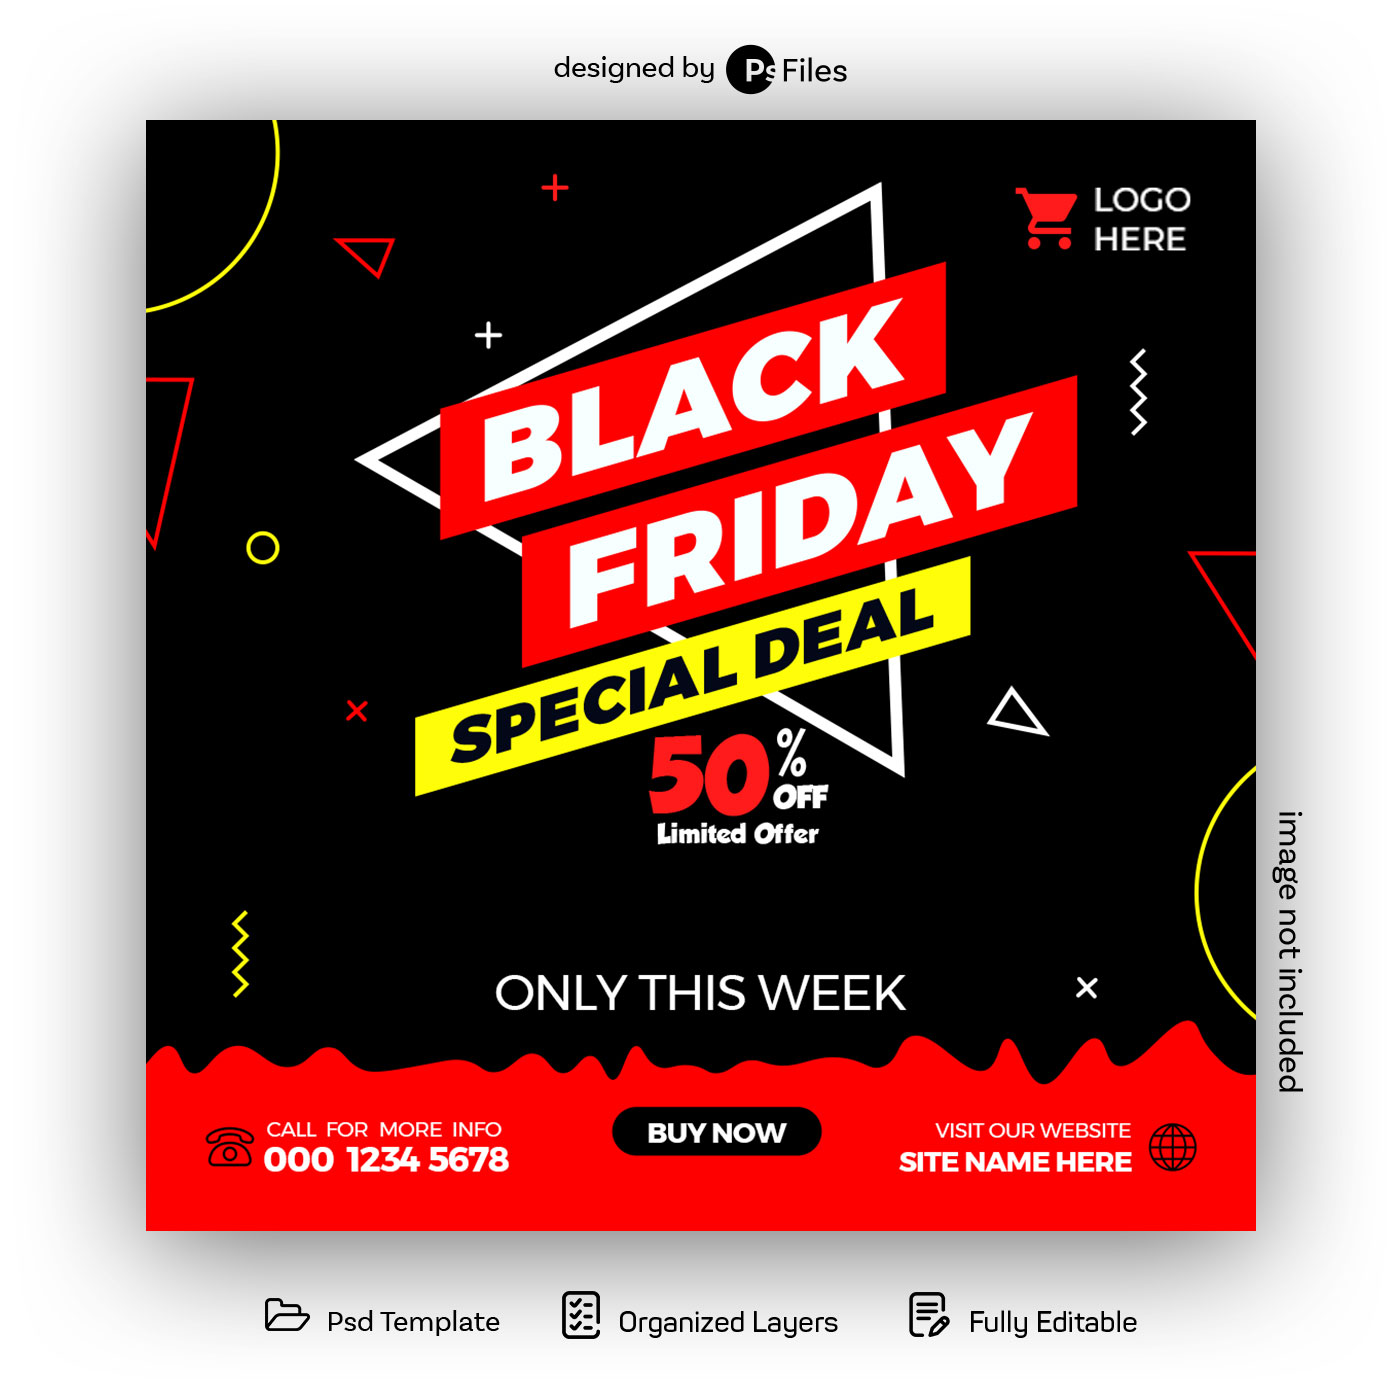 Black Friday Sales Free Instagram Post Design Template PSD